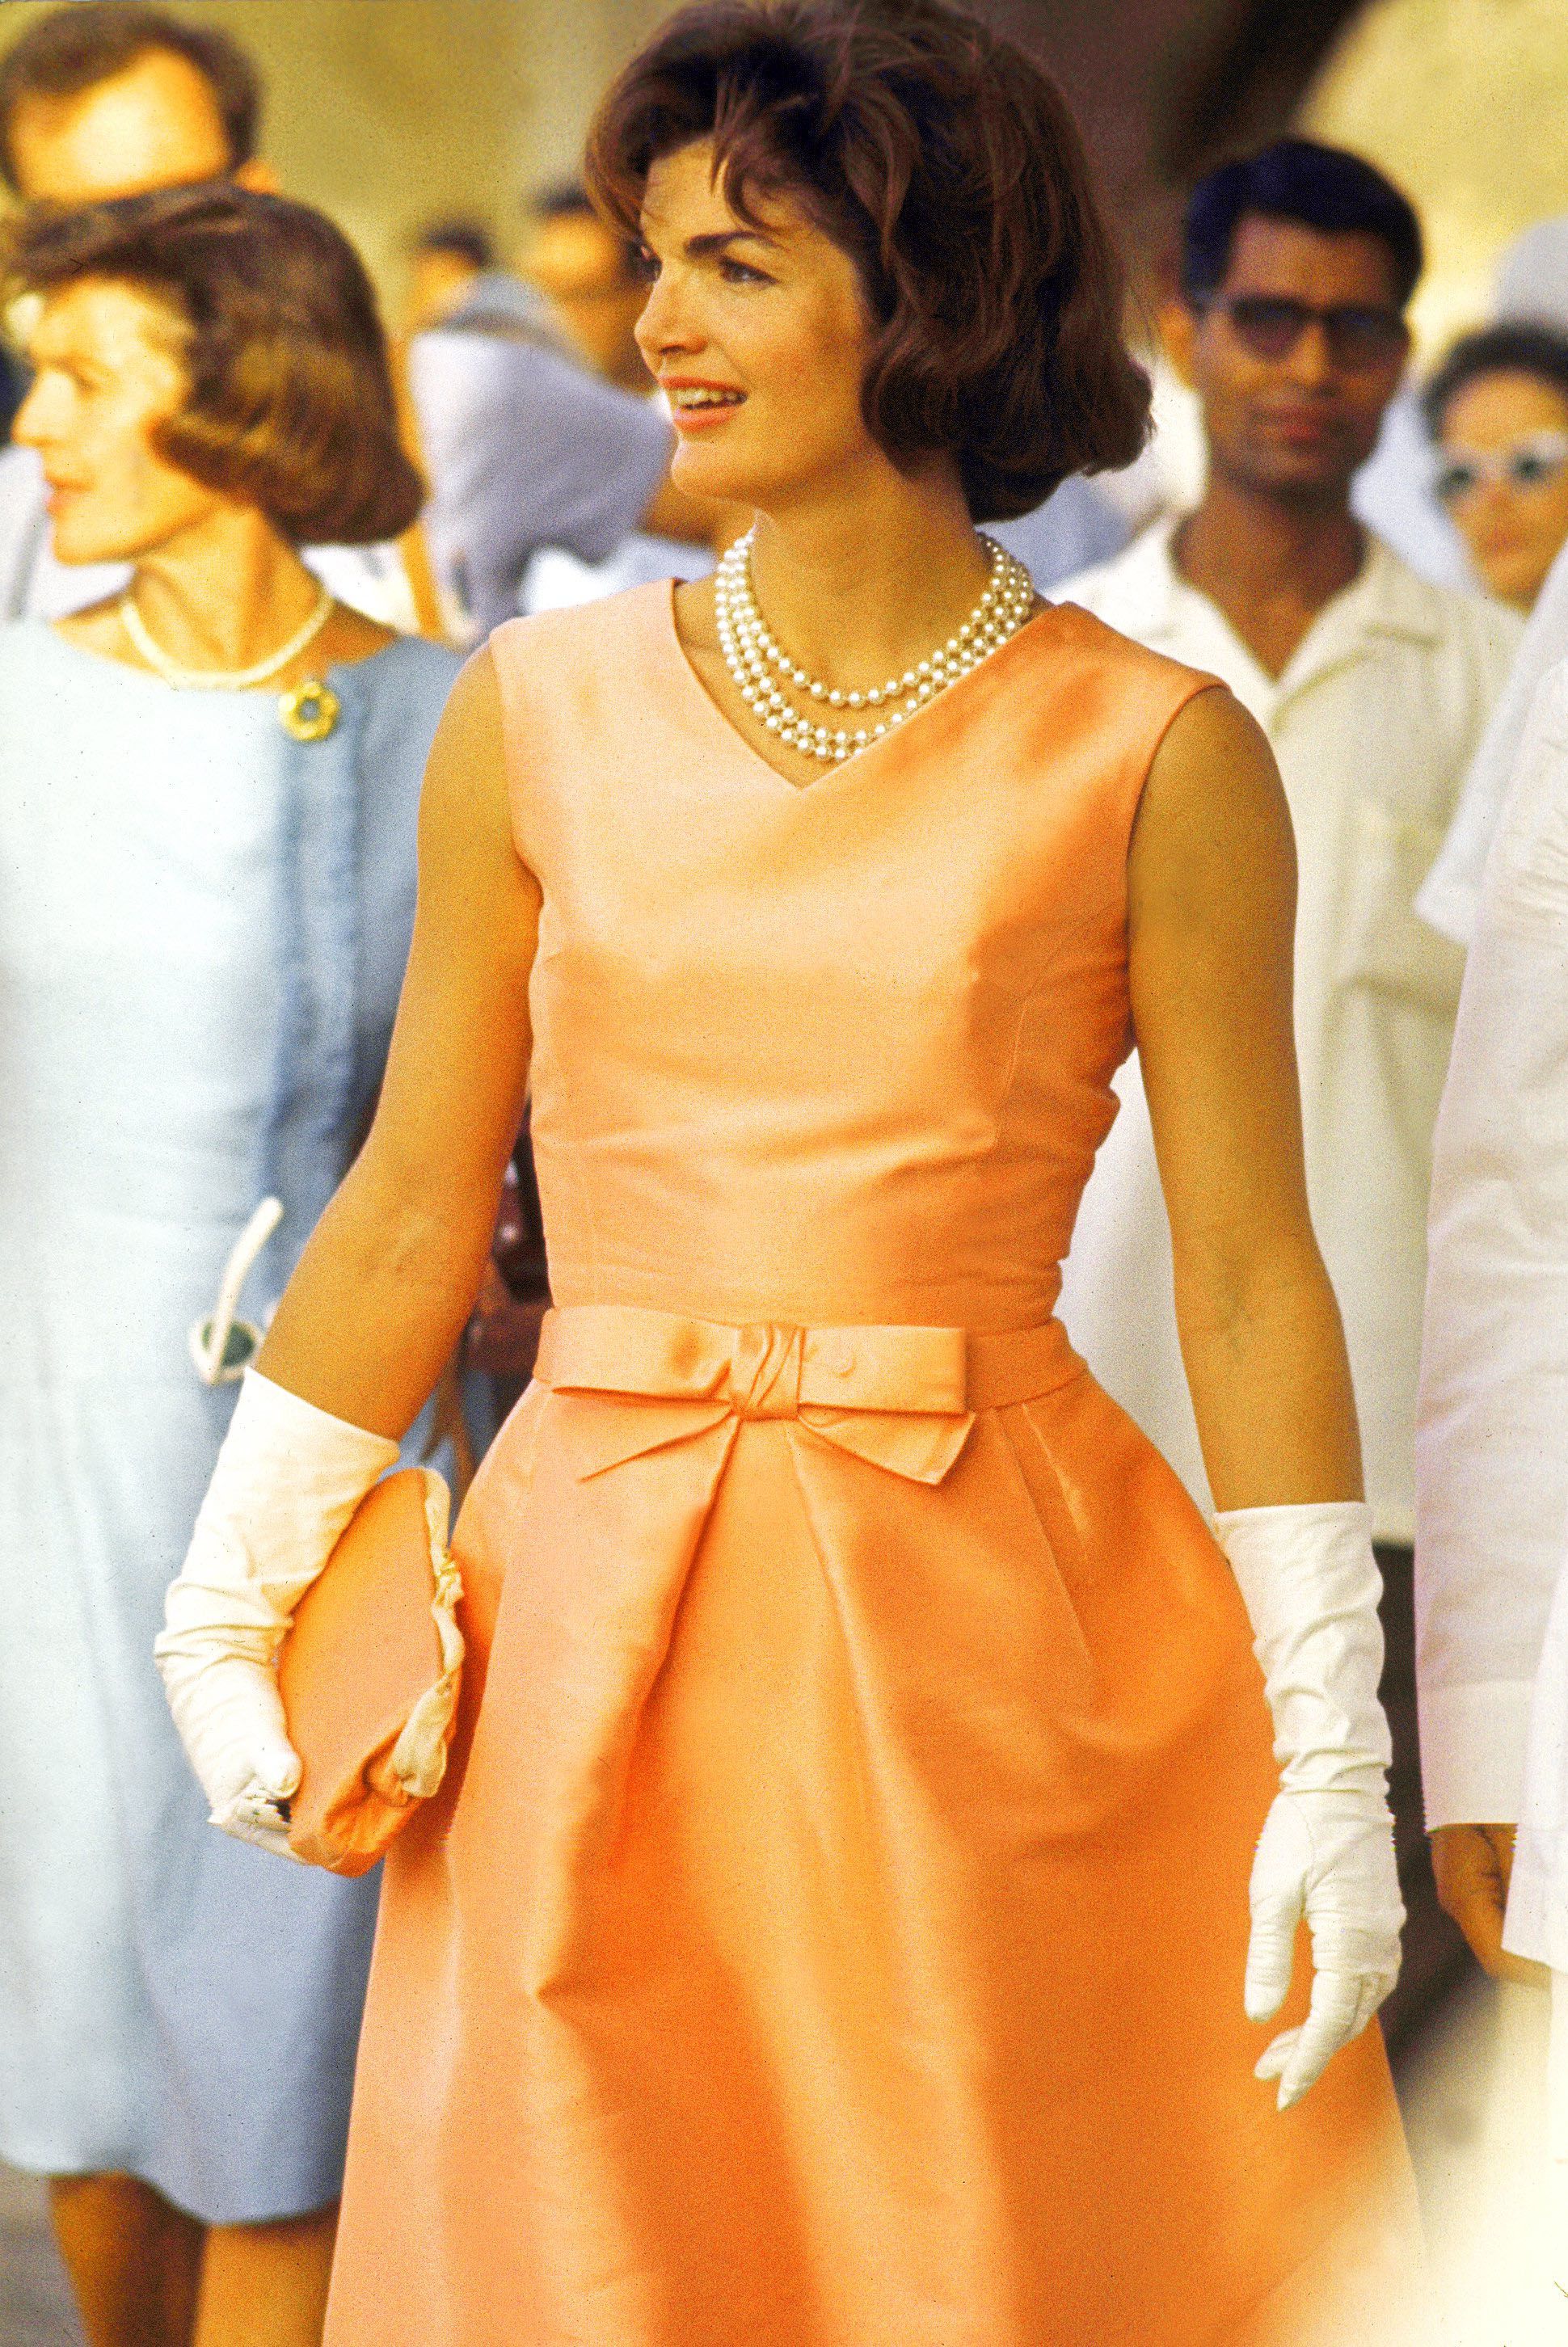 Kamala Harris's Pearl Necklace Has Deep Symbolism That Goes Way